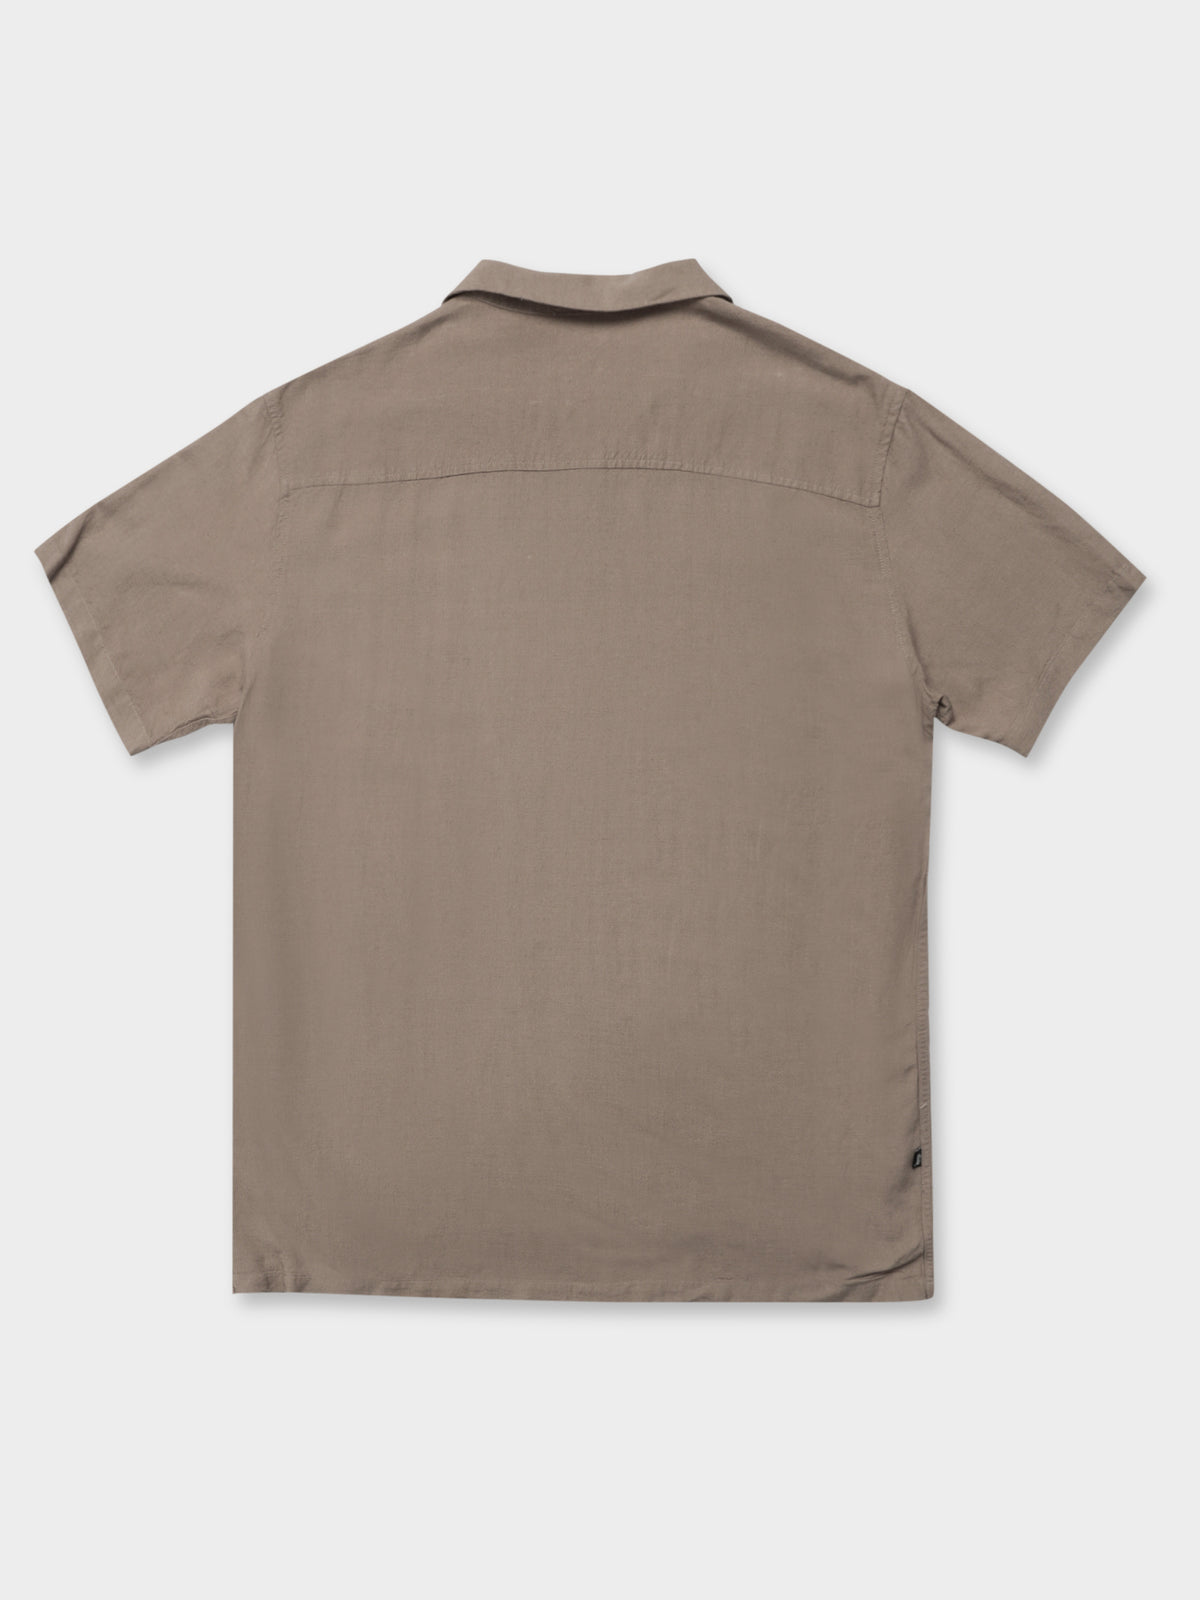 Stussy Linen Shirt in Tan